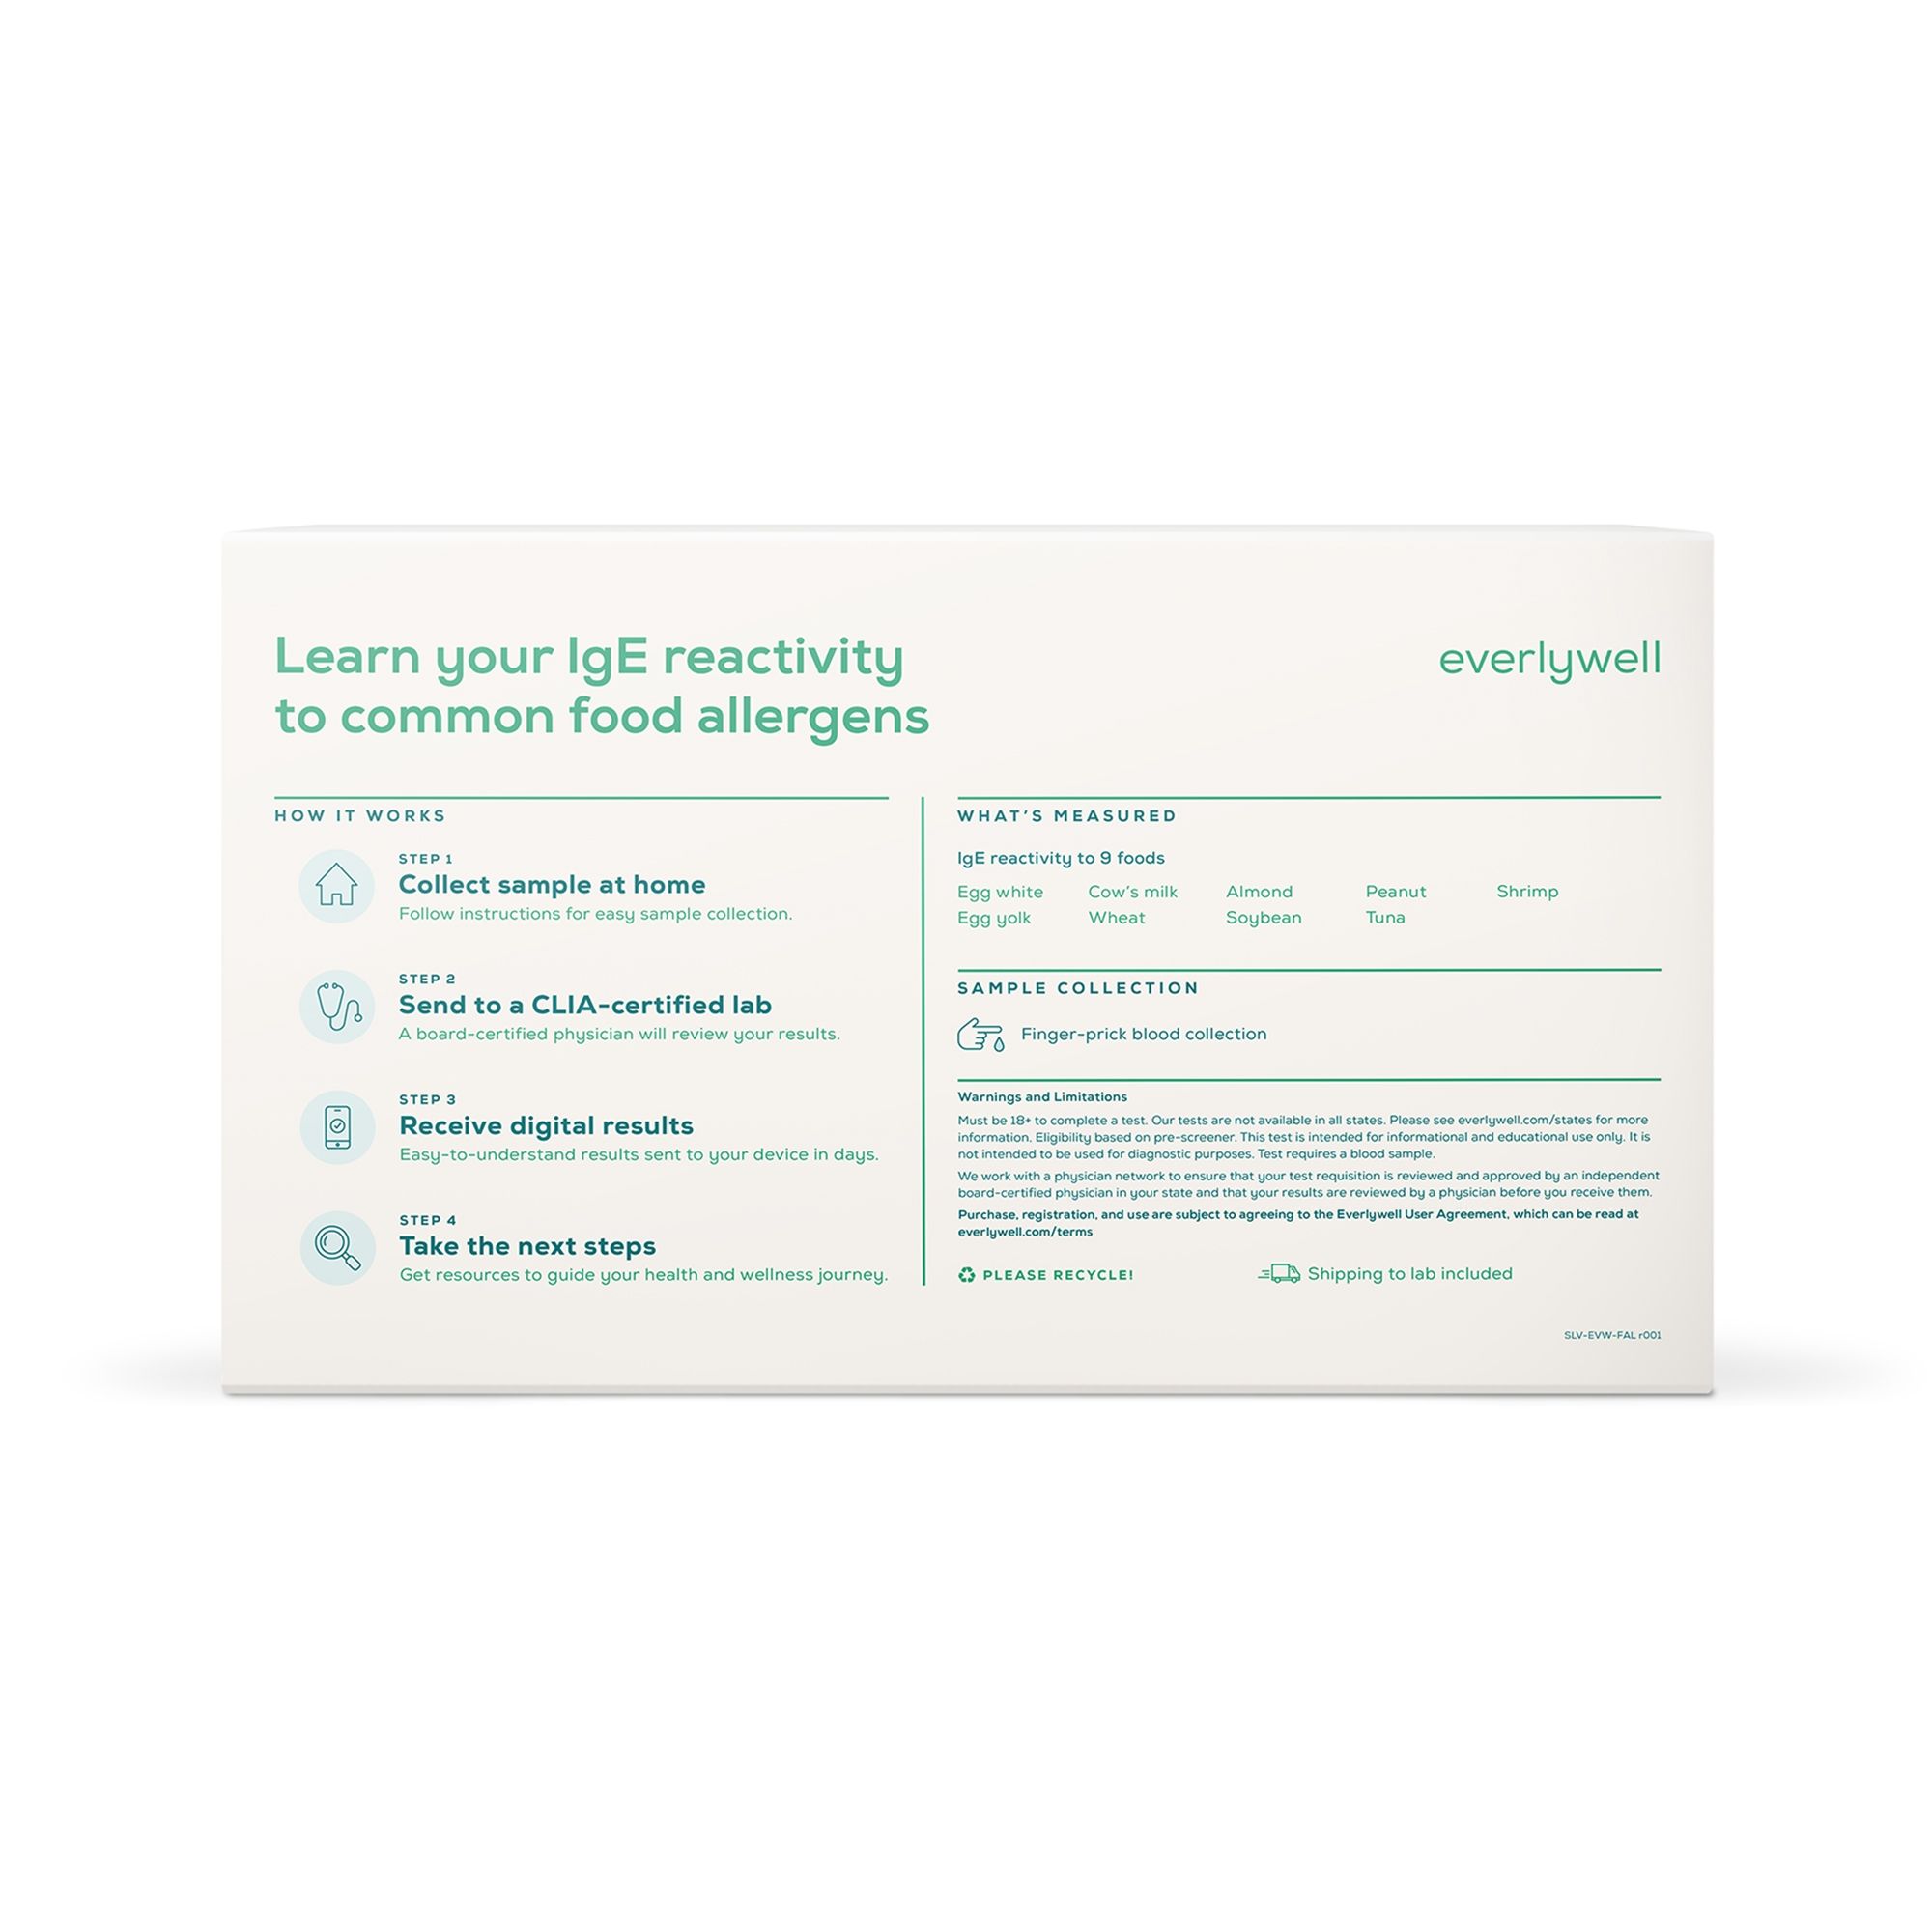 Everlywell Food Allergy Test - 1 Test Kit